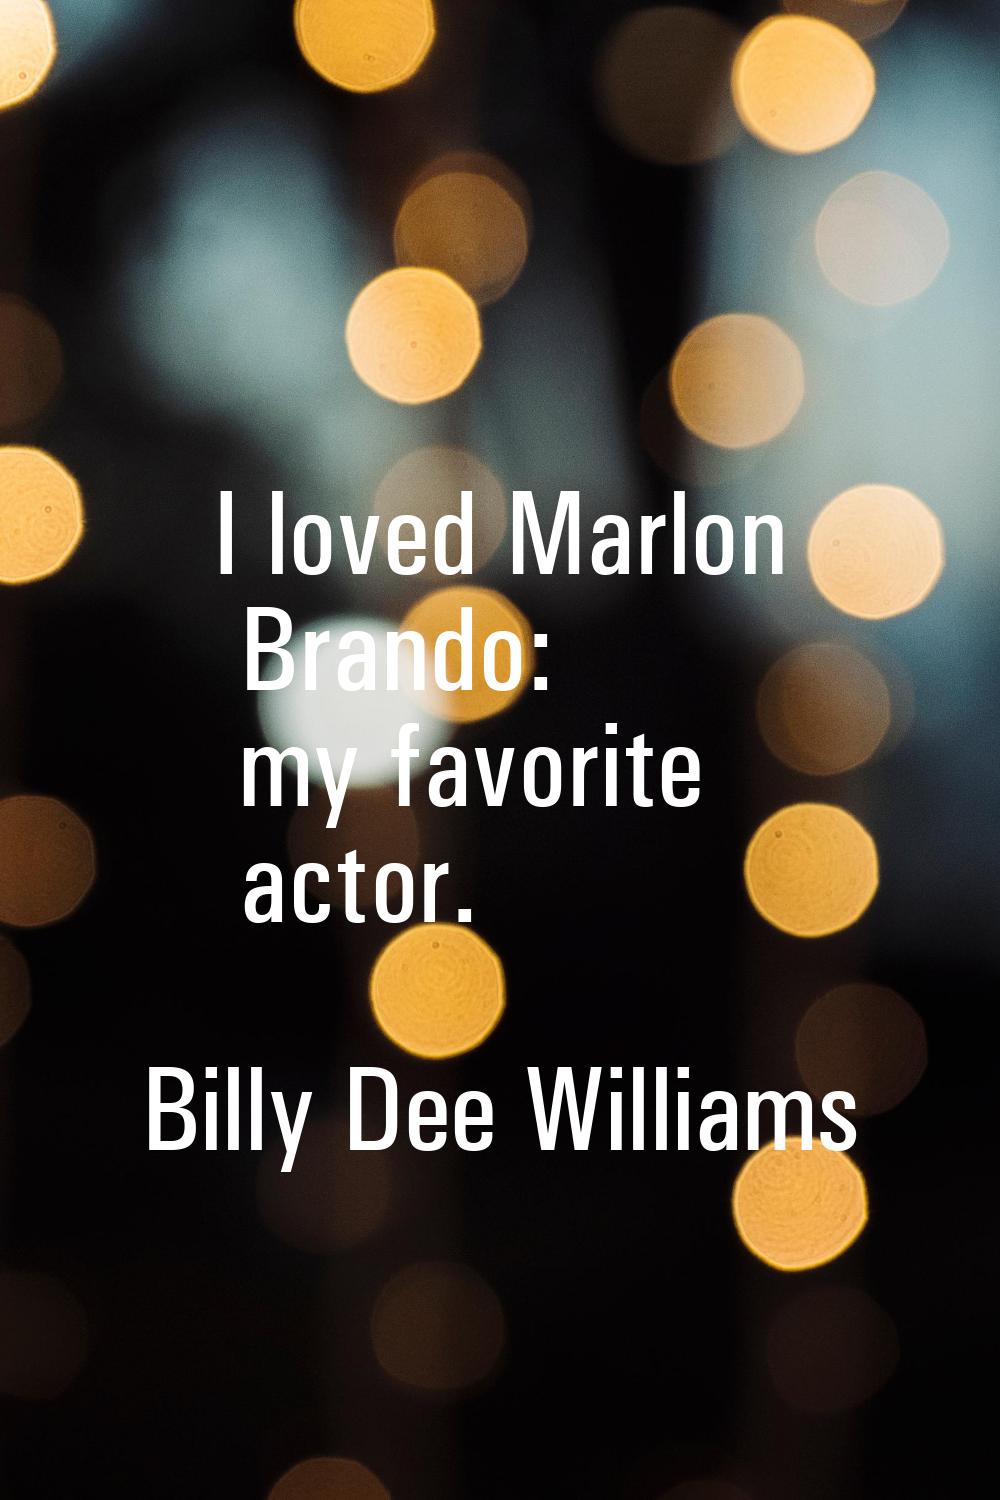 I loved Marlon Brando: my favorite actor.